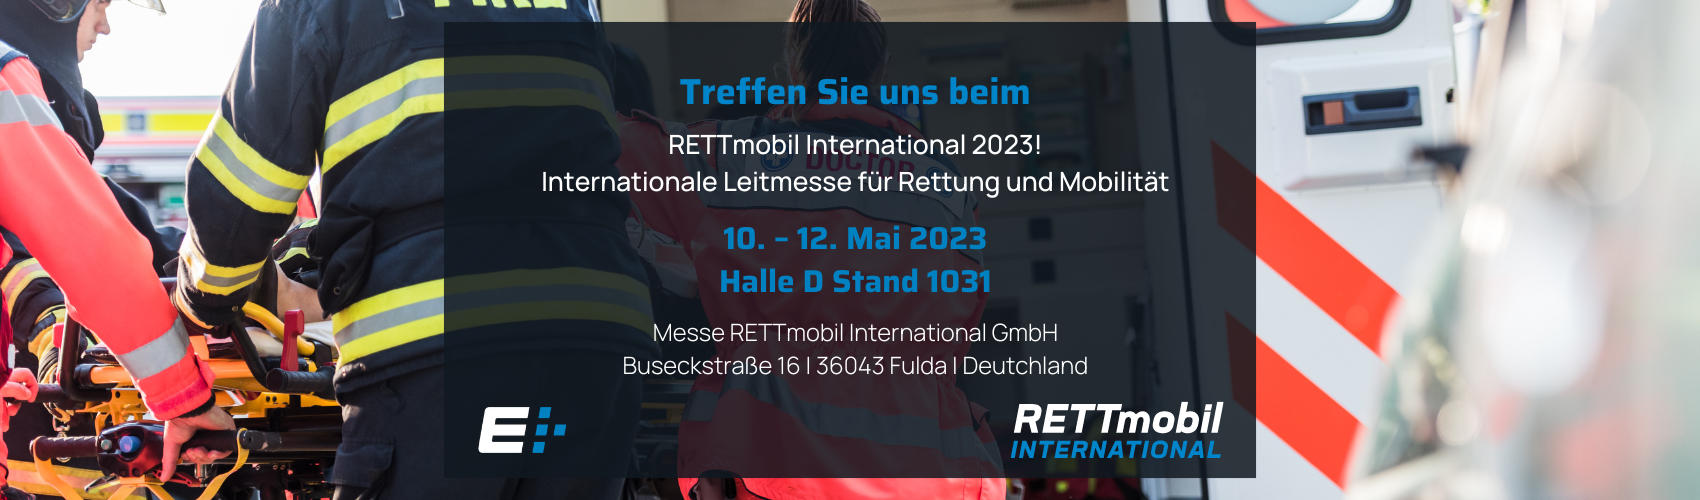 DE news banner - RETTmobil